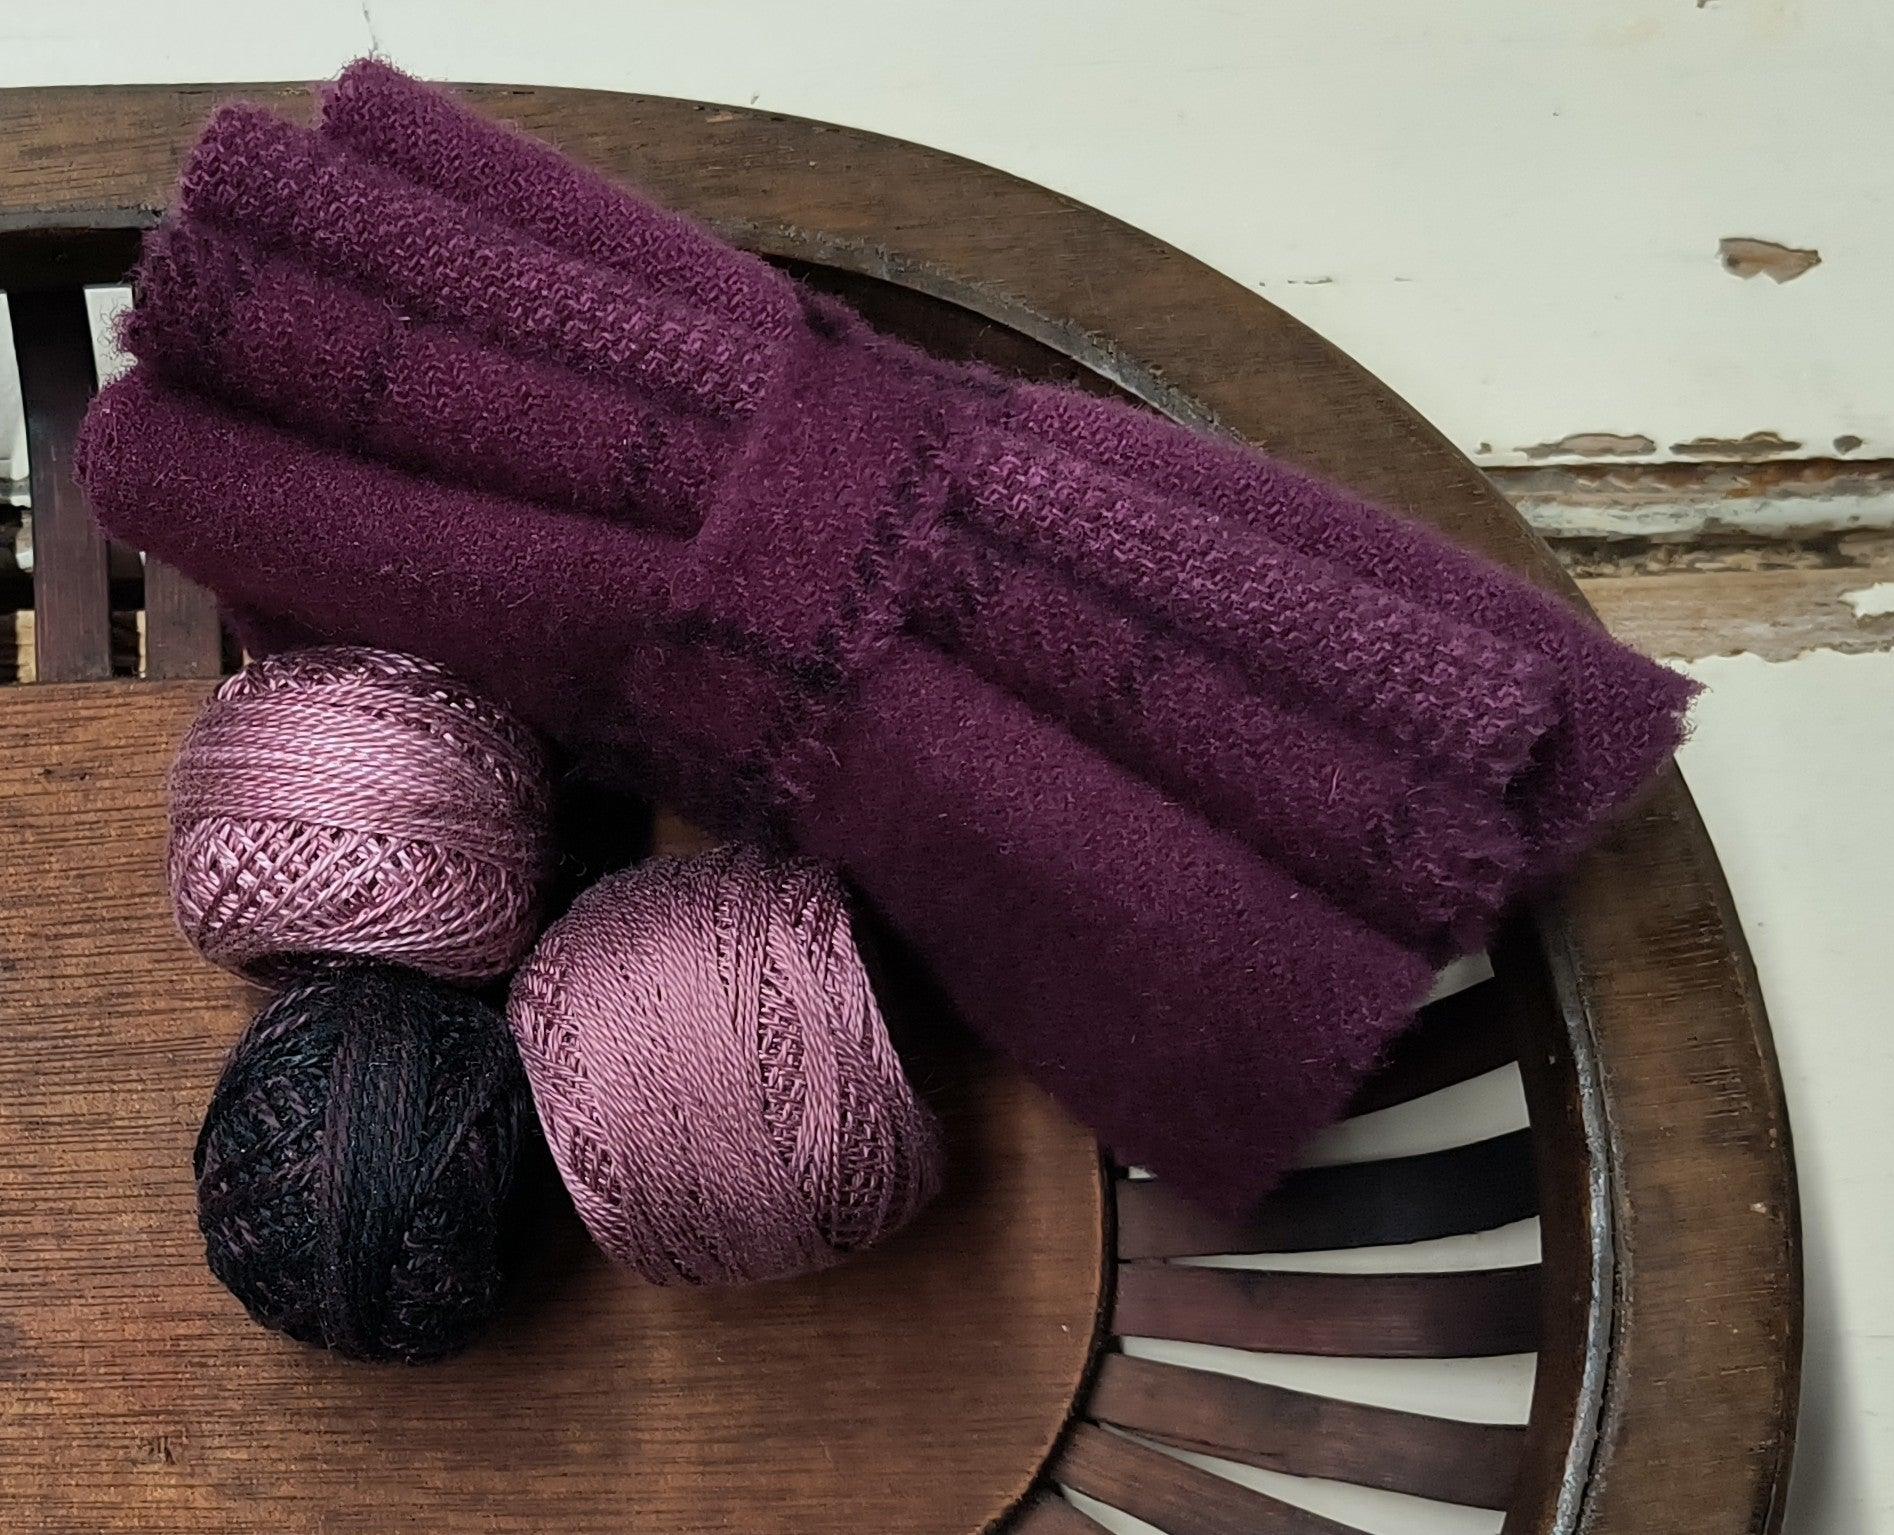 SANGRIA BUNDLE Hand Dyed Wool - All About Ewe Wool Shop